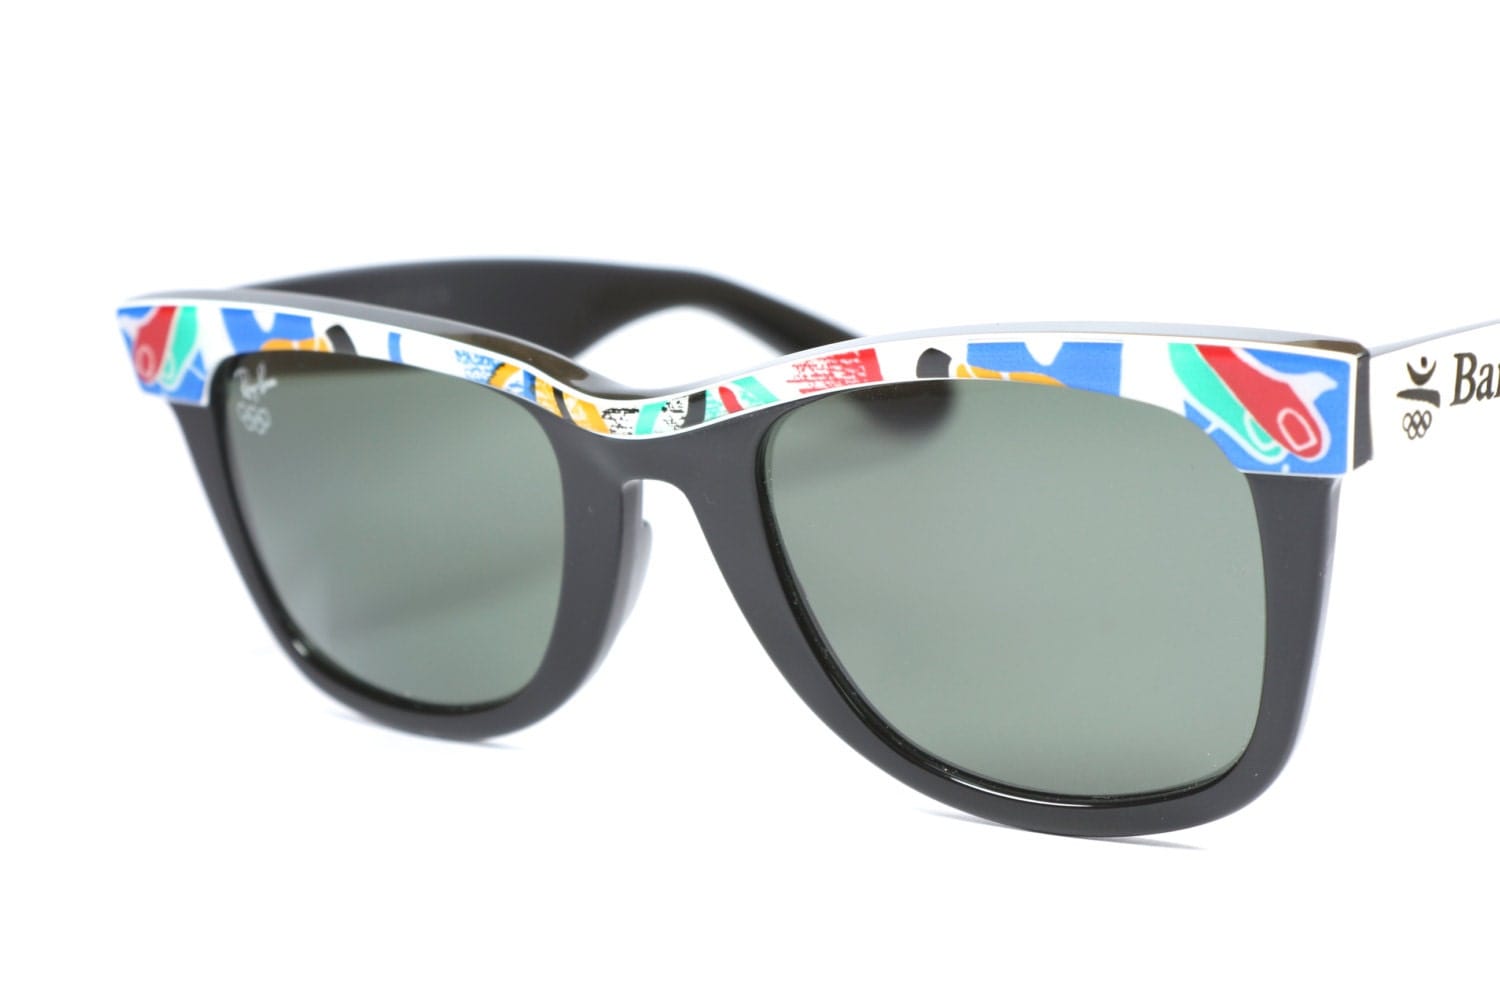 Vintage sunglasses B&L Ray Ban Wayfarer I Olympic Games Series